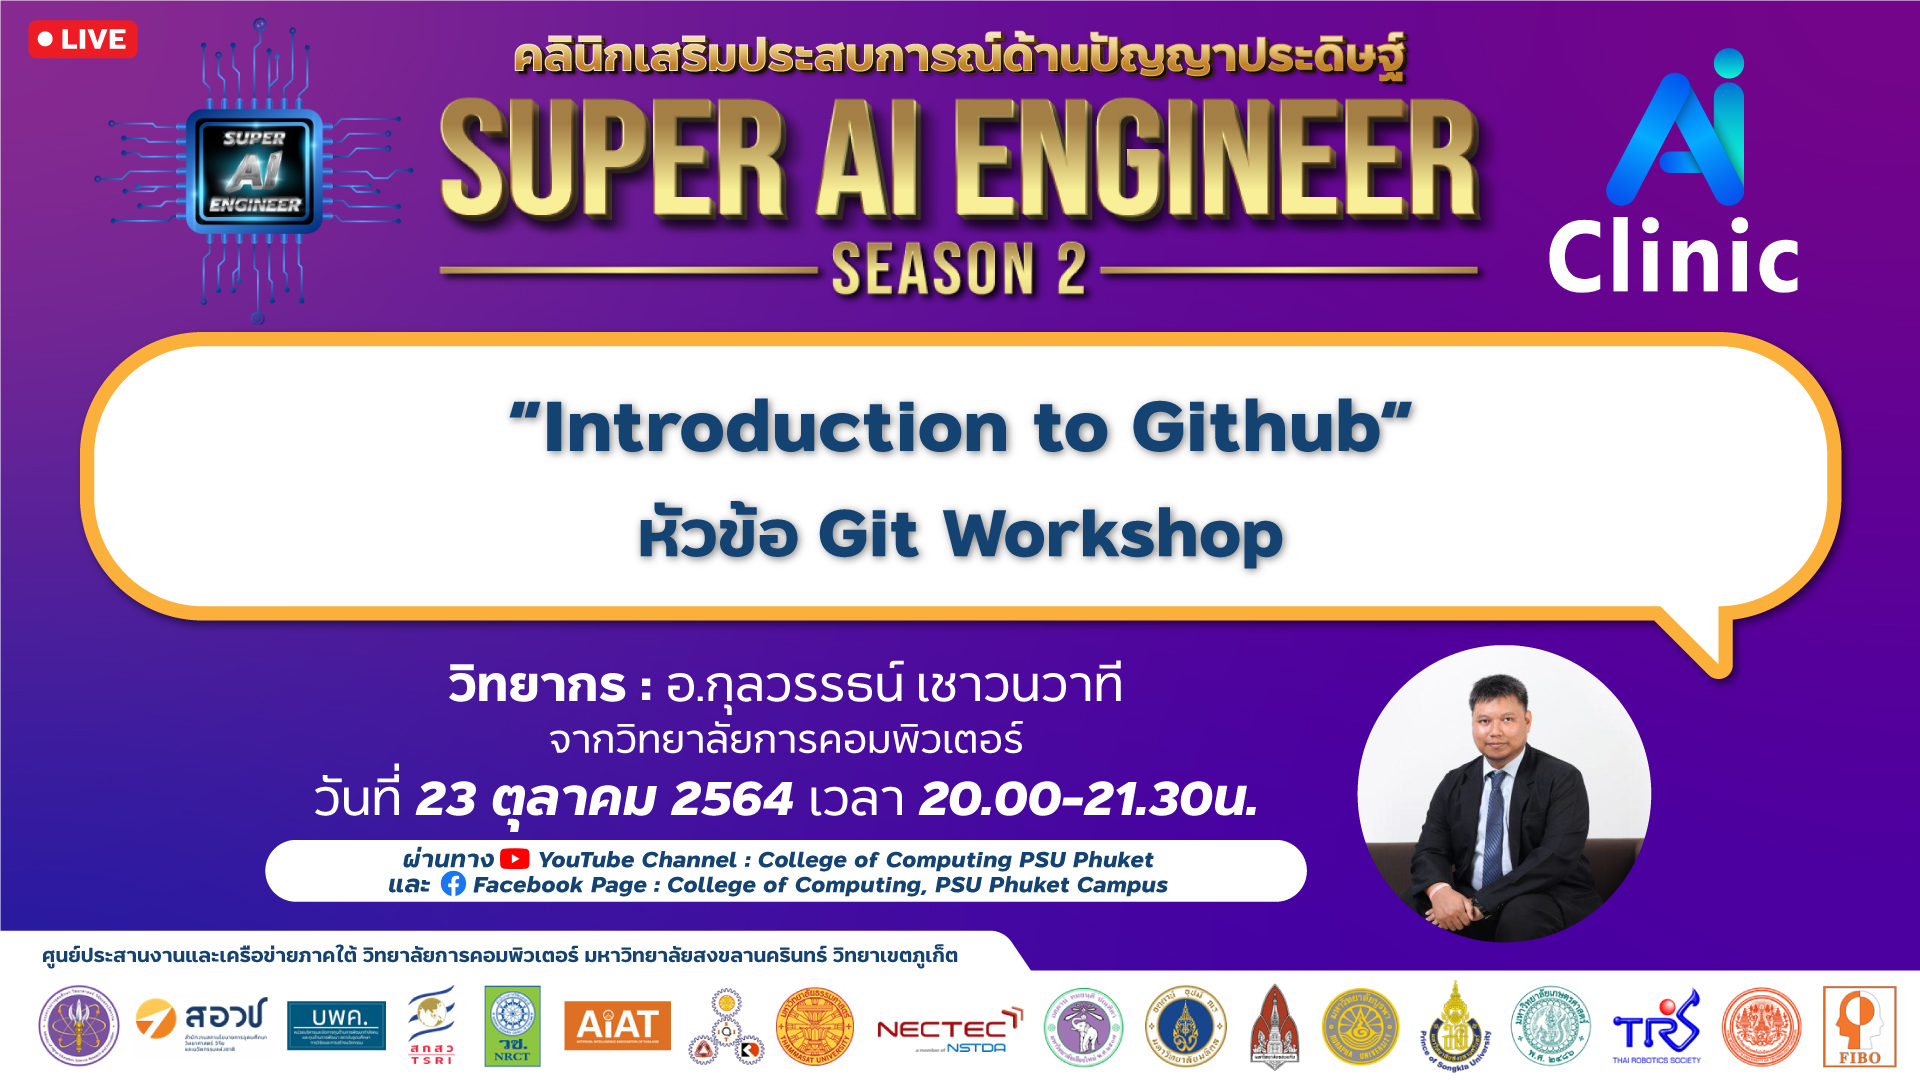 Introduction to GitHub : “Git Workshop”